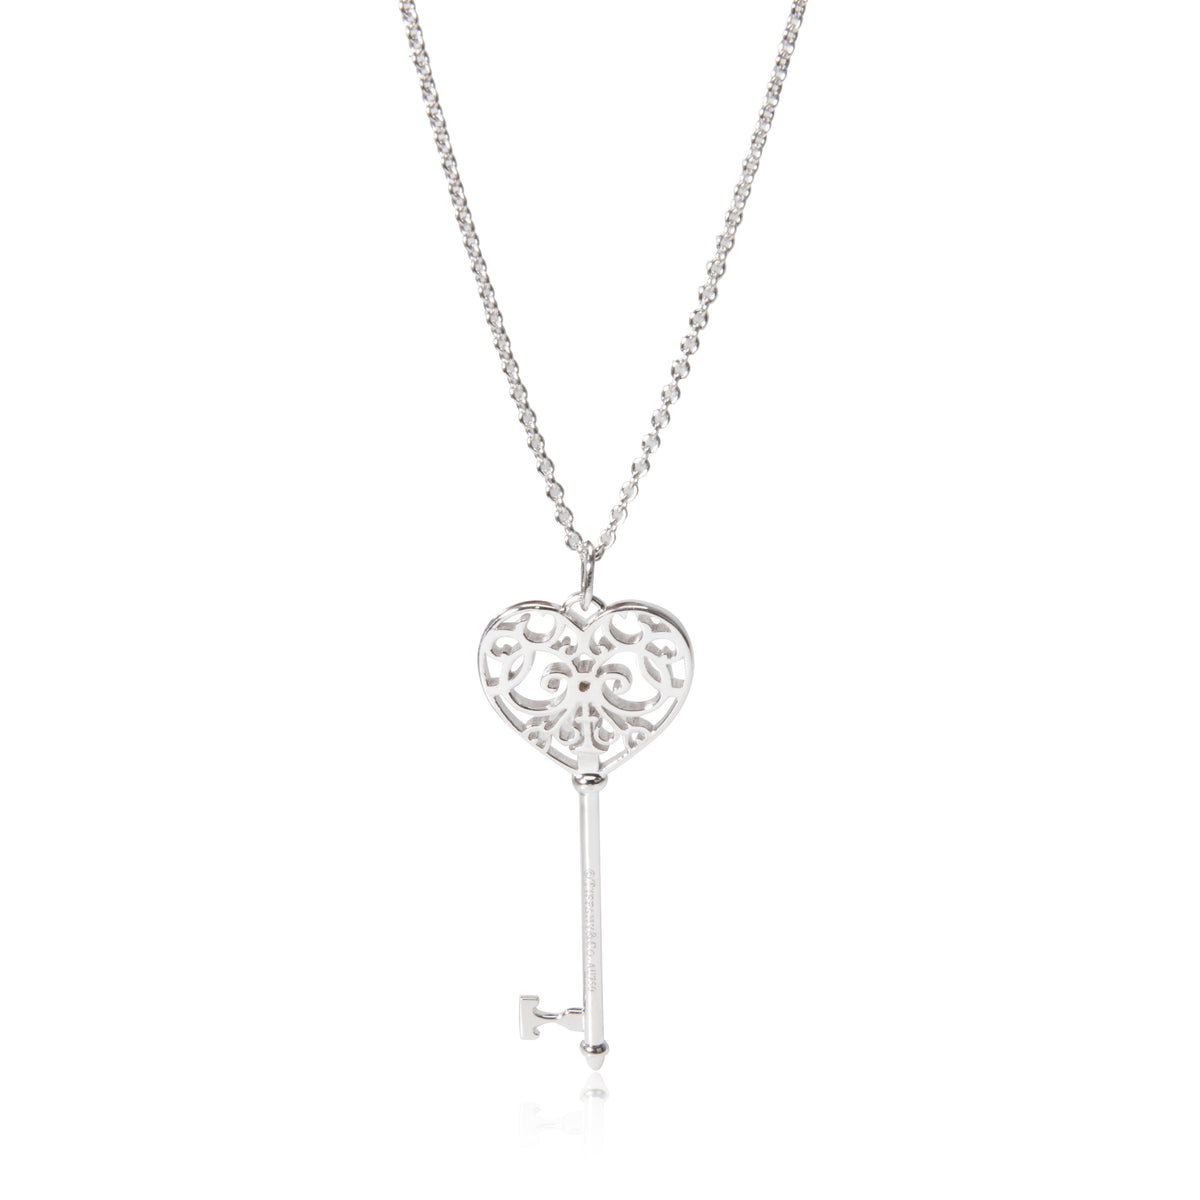 Tiffany & Co. Heart Keys Diamond Necklace in 18K White Gold 0.02 CTW